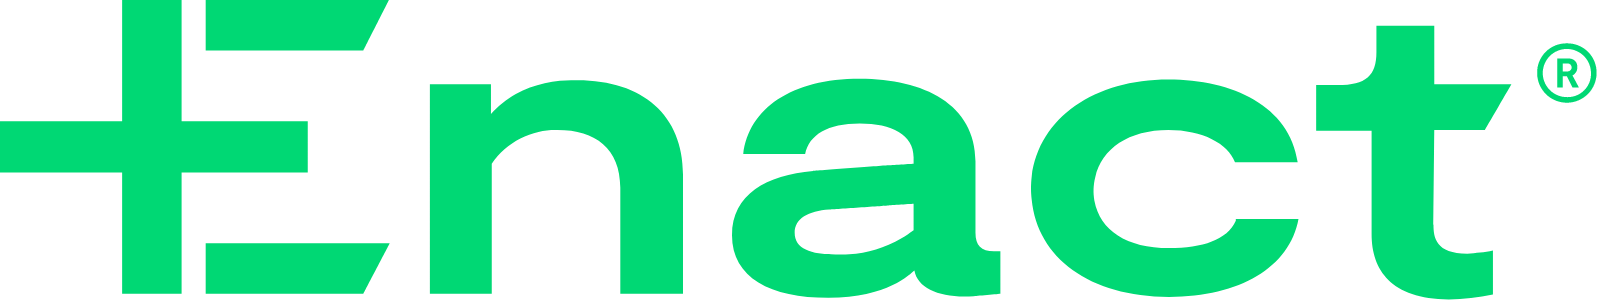 Enact Holdings logo large (transparent PNG)